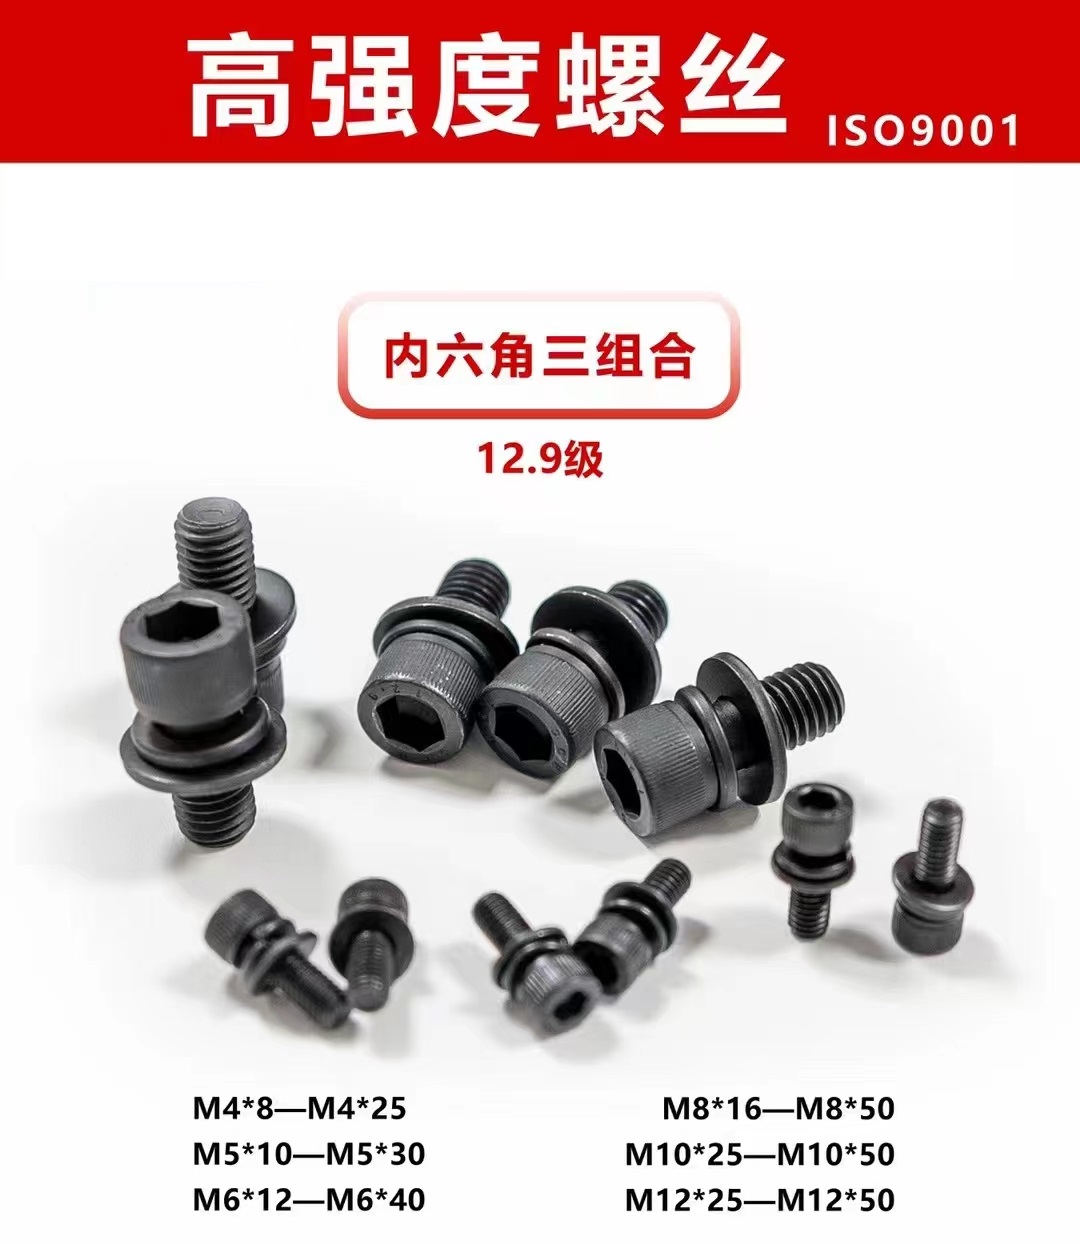 DIN912 Socket screws-new product